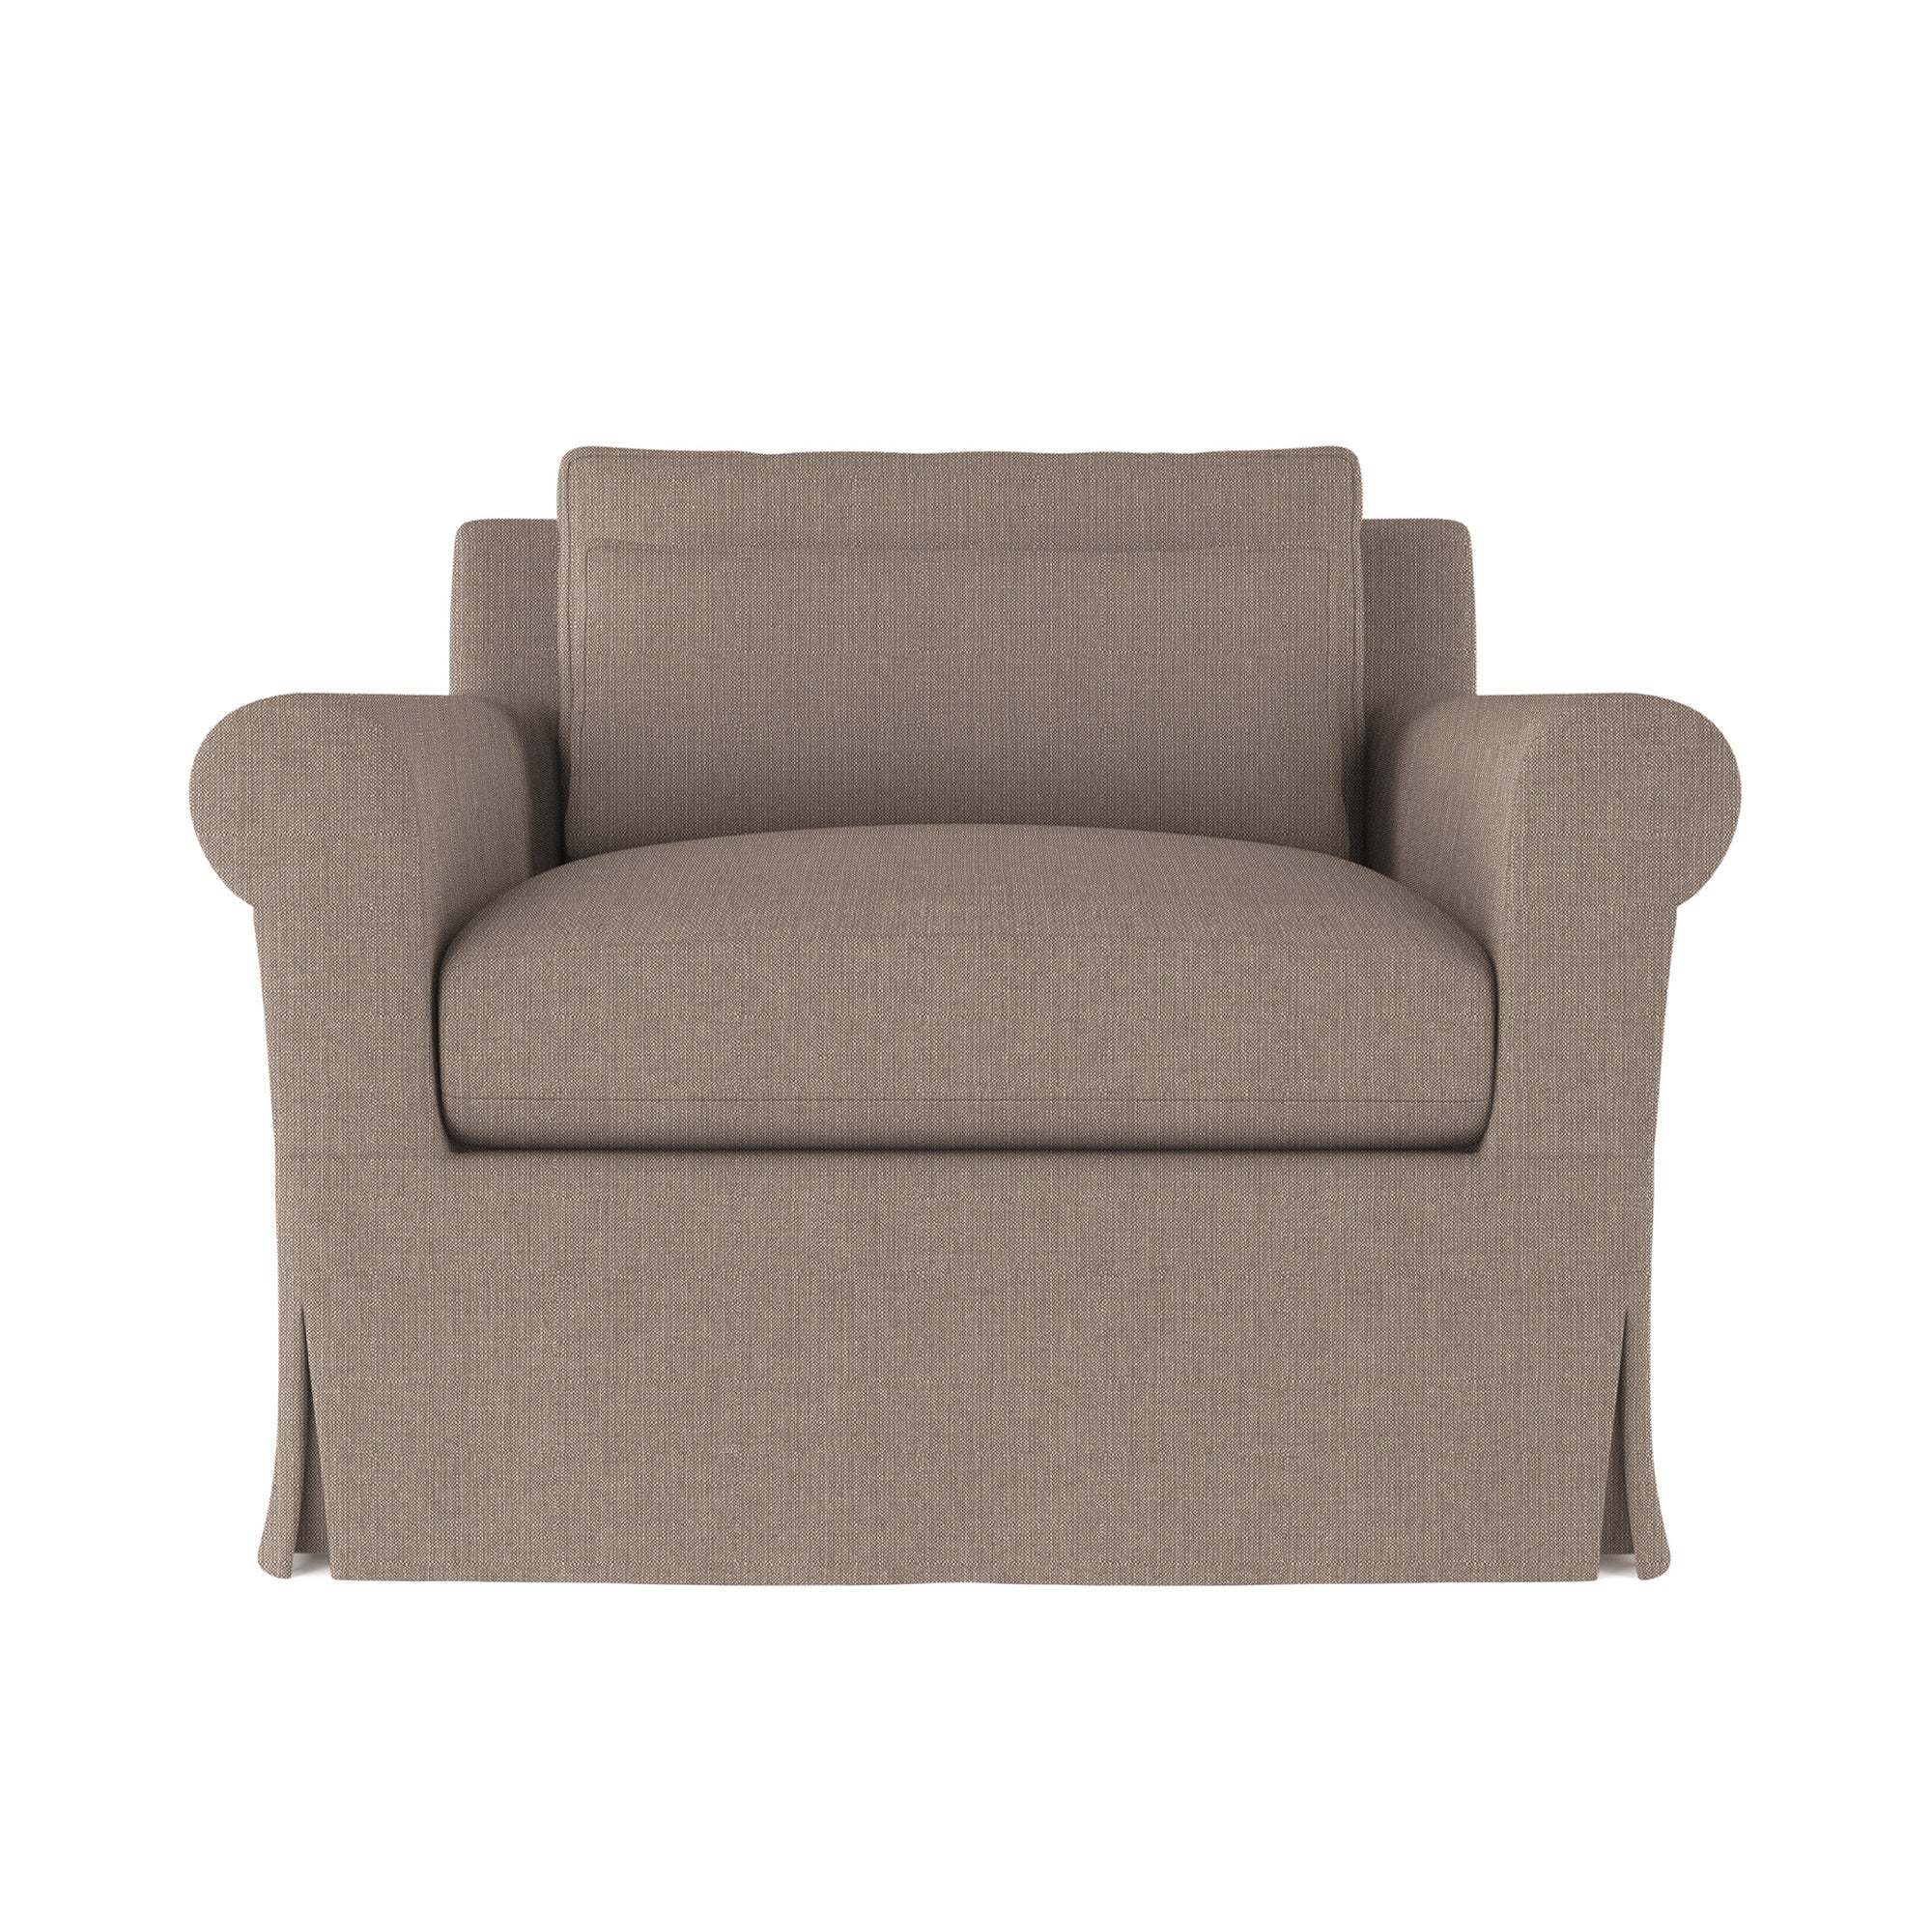 Ludlow Chair - Pumice Box Weave Linen